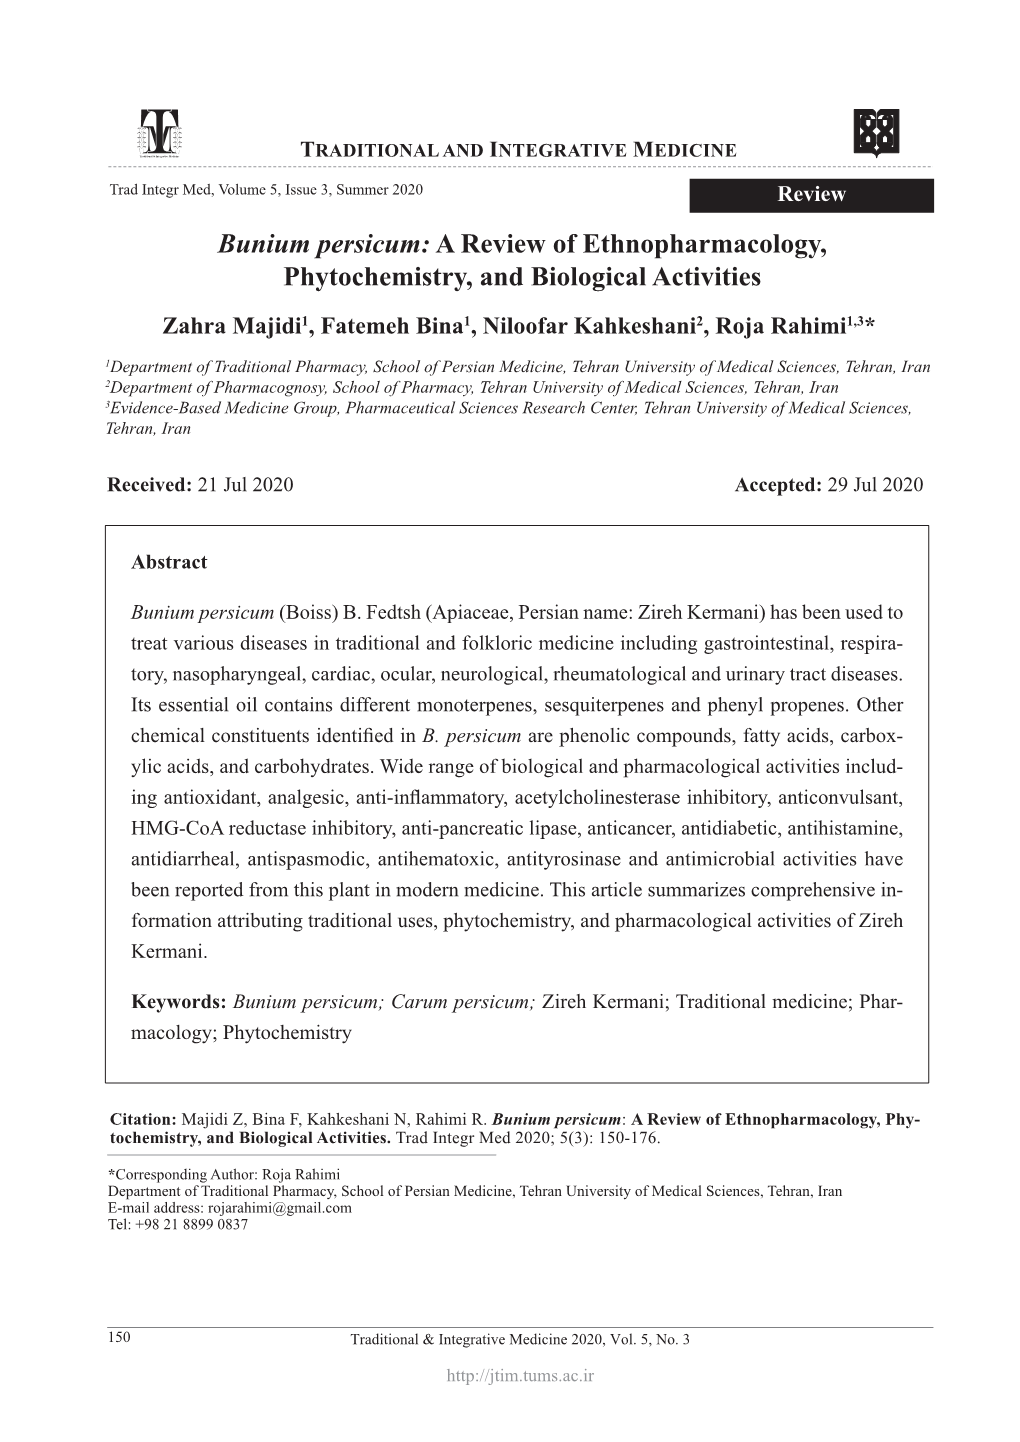 Bunium Persicum: a Review of Ethnopharmacology, Phytochemistry, and Biological Activities Zahra Majidi1, Fatemeh Bina1, Niloofar Kahkeshani2, Roja Rahimi1,3*